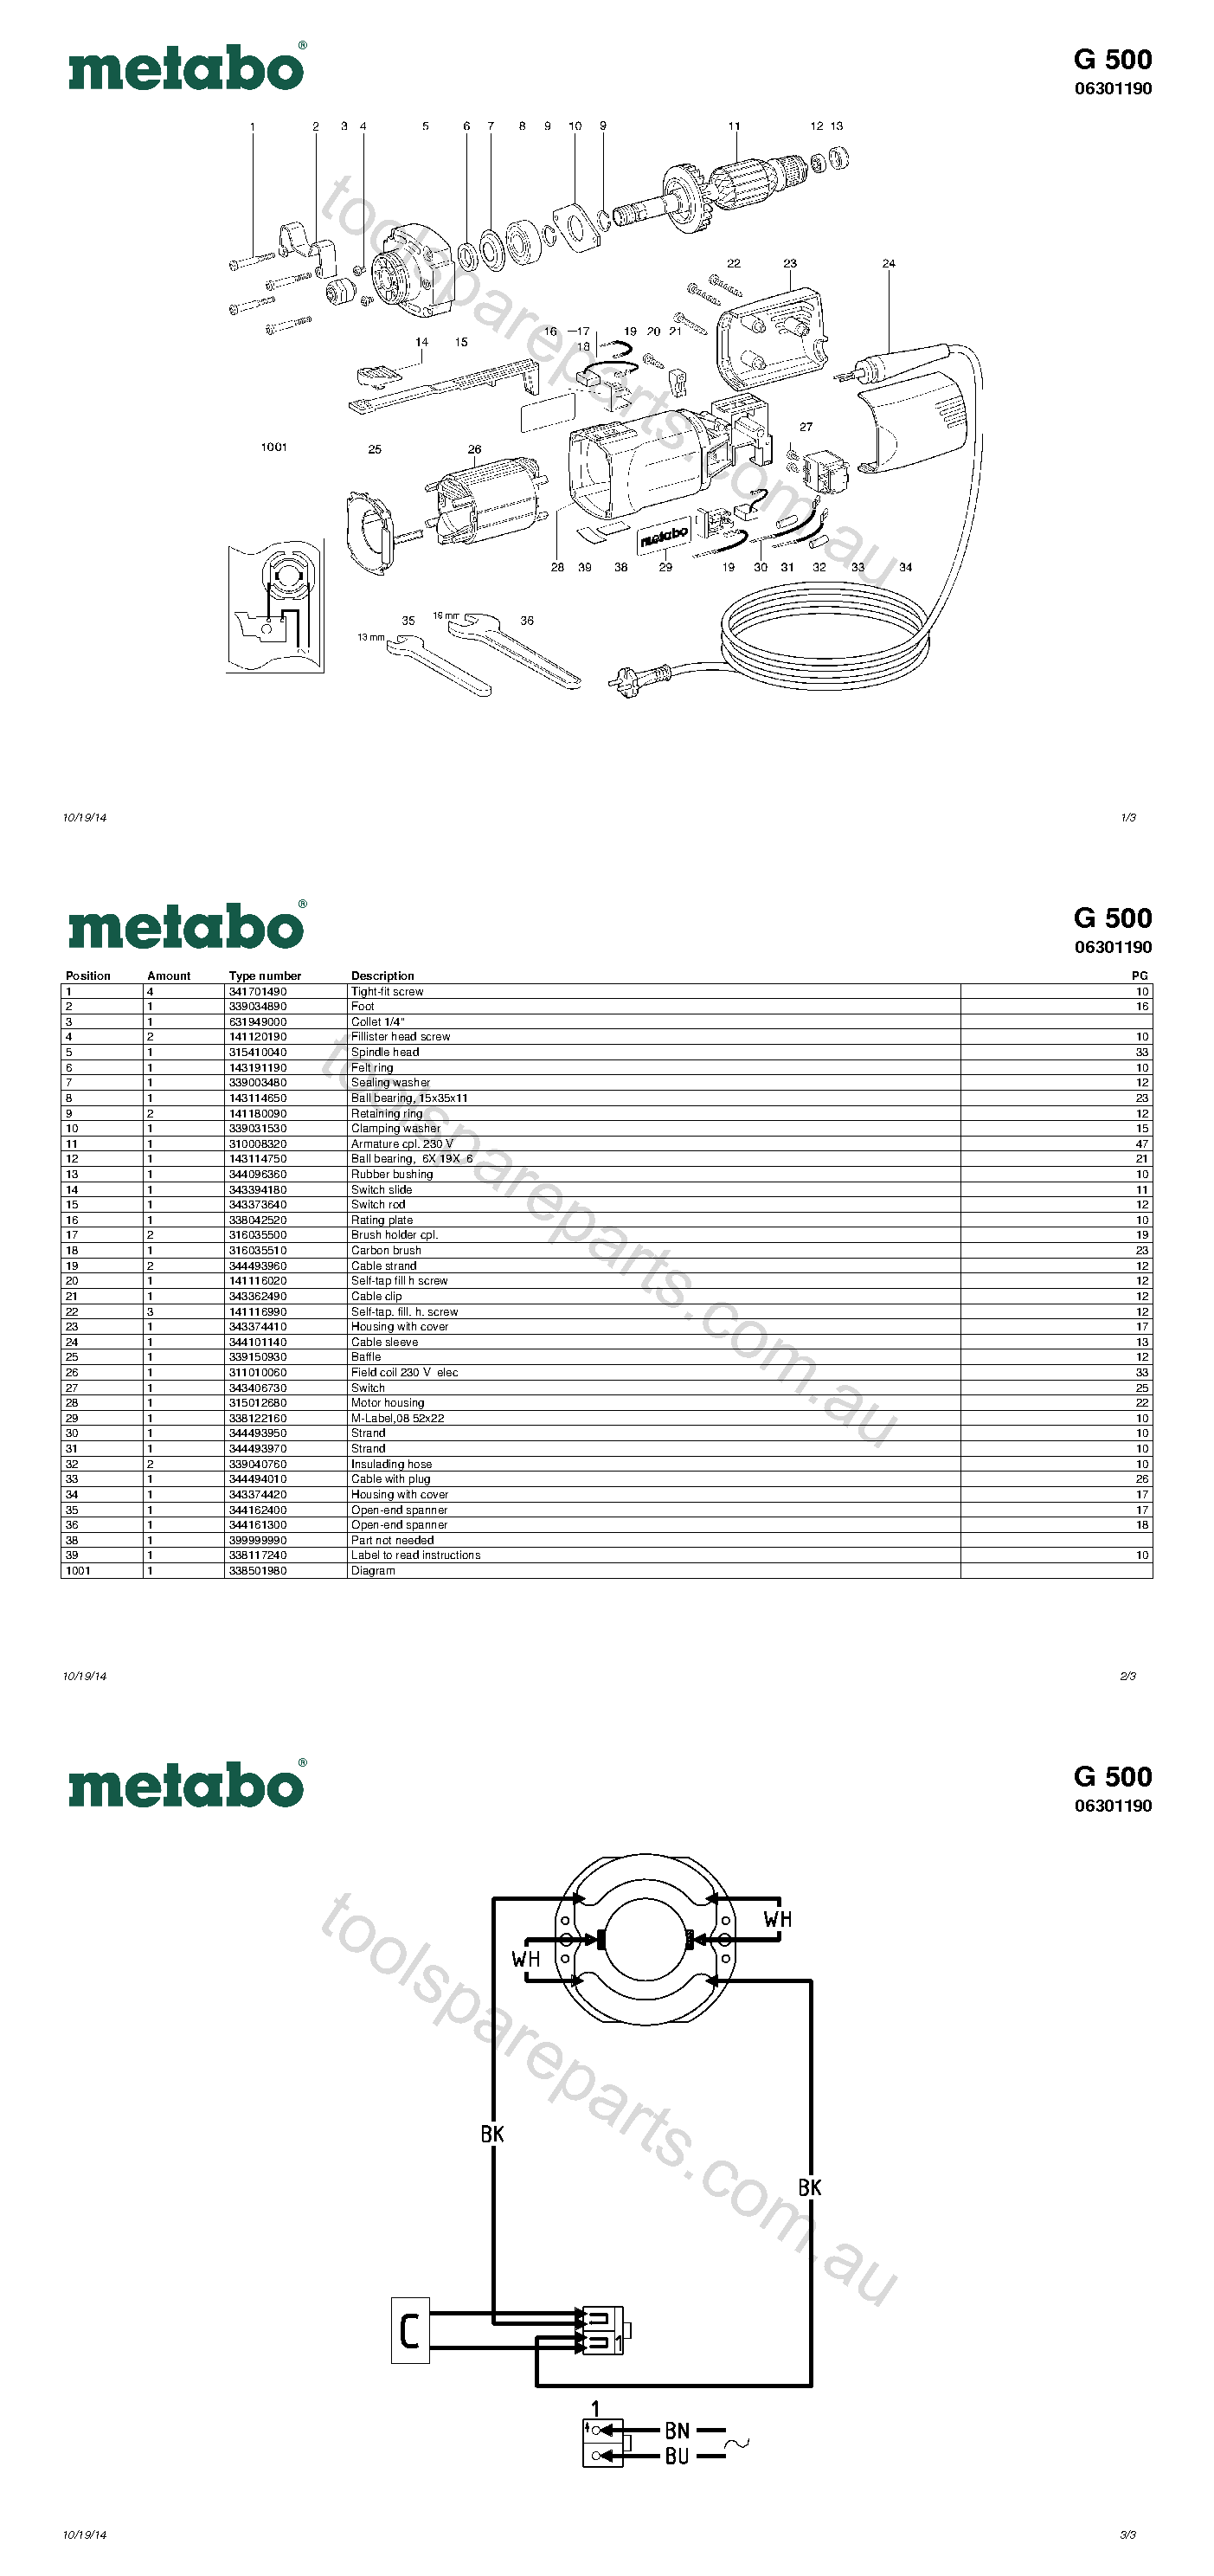 Metabo G 500 06301190  Diagram 1